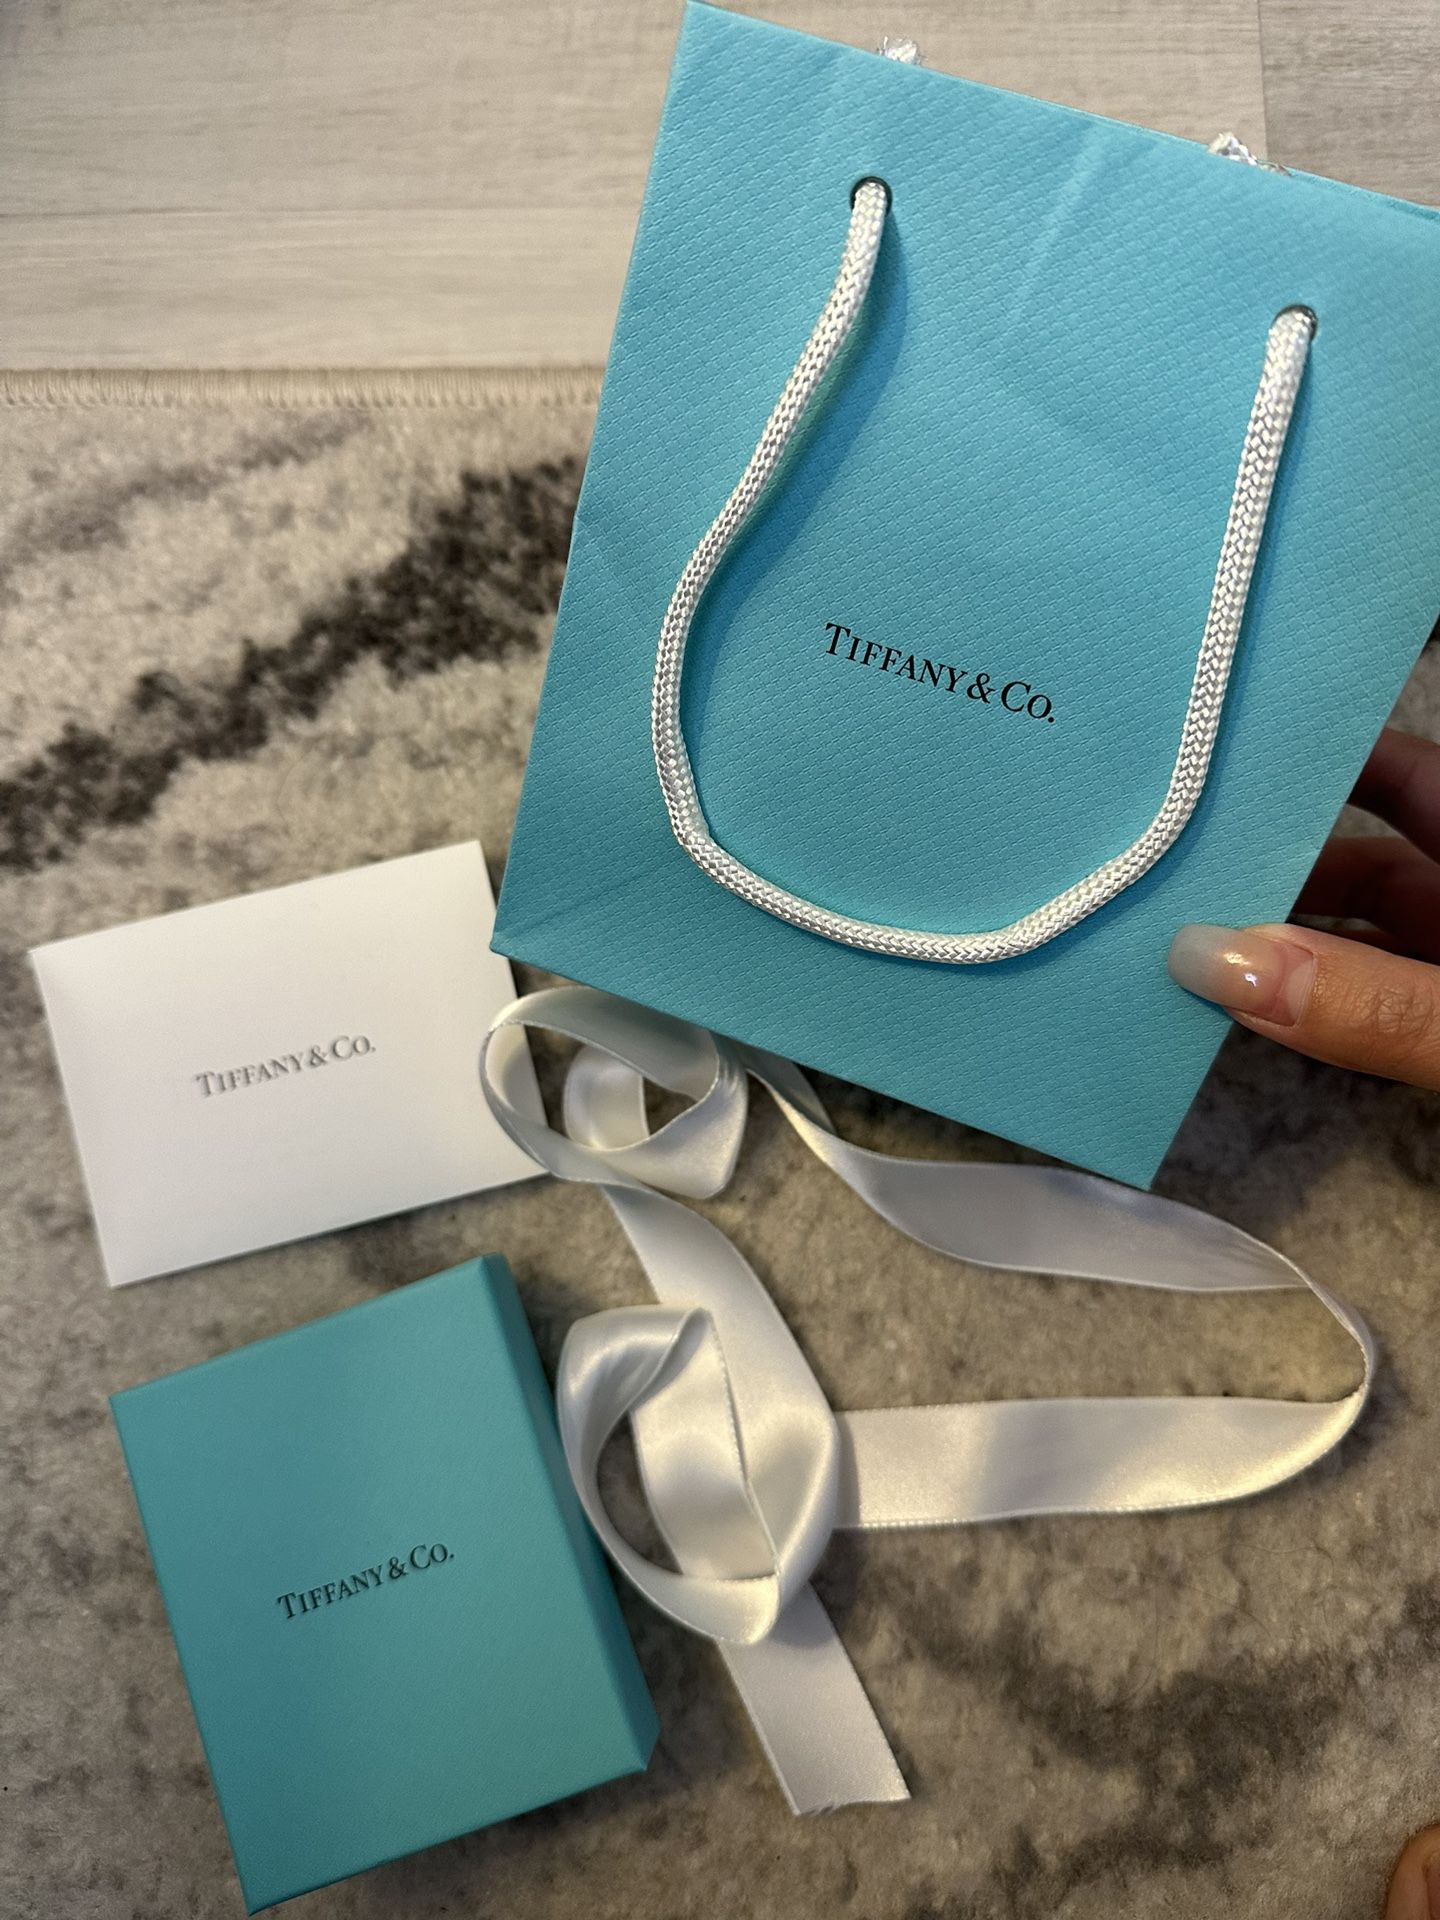 Tiffany blie jewelry gift box set